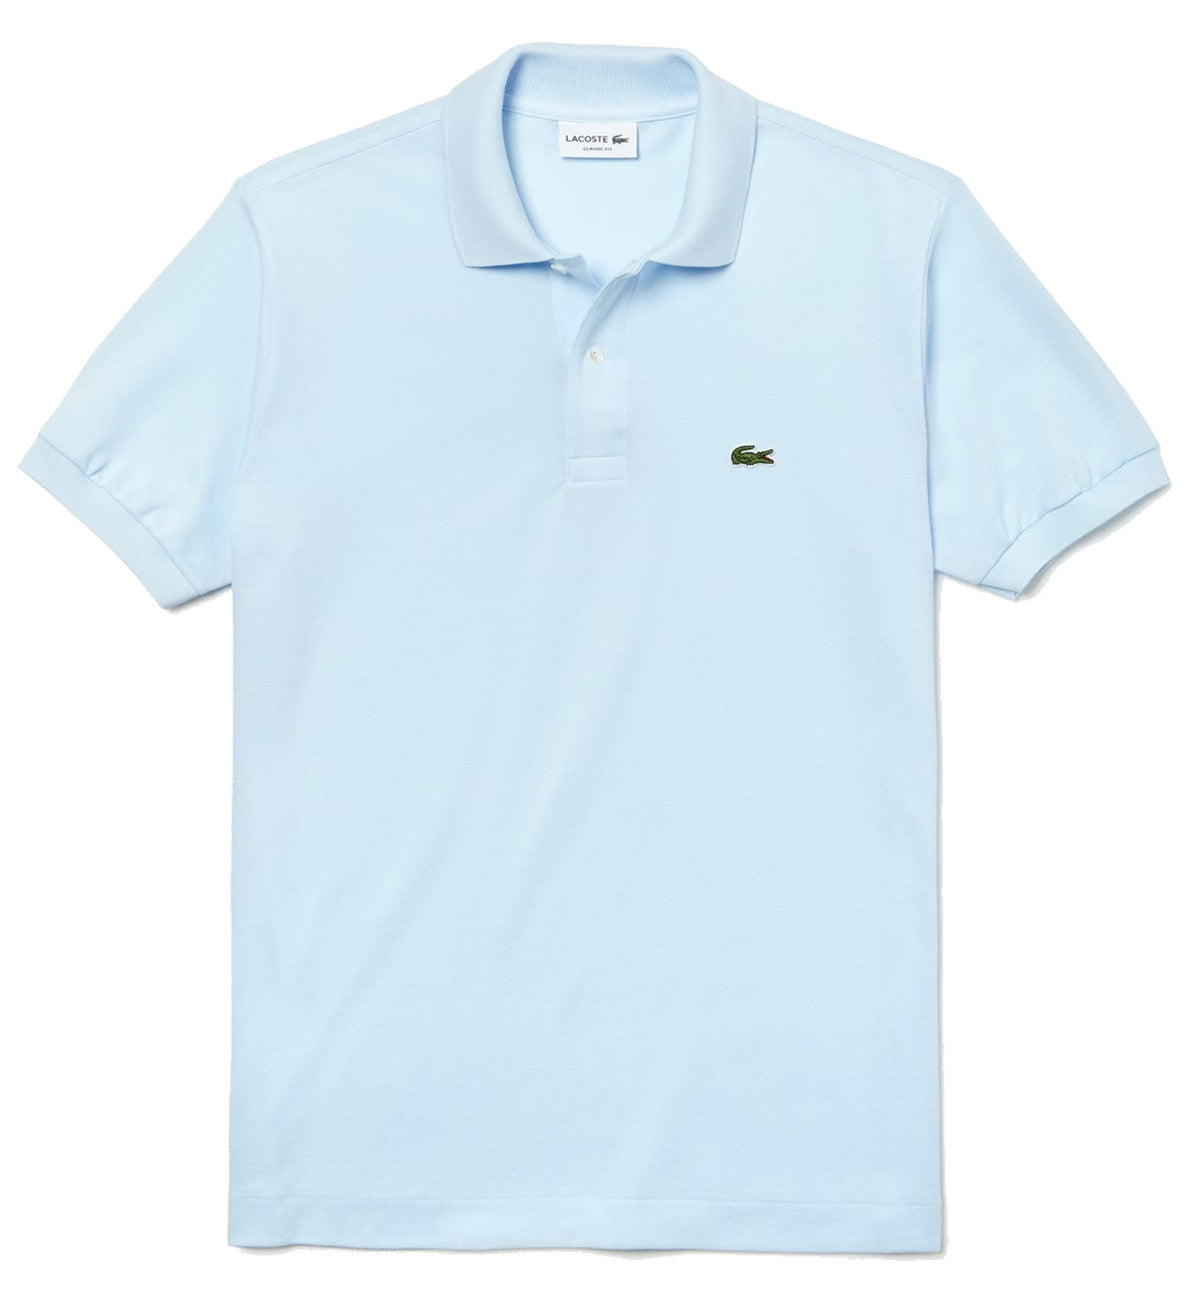 Lacoste Classic Fit Cotton Polo Shirt (Sky Blue)